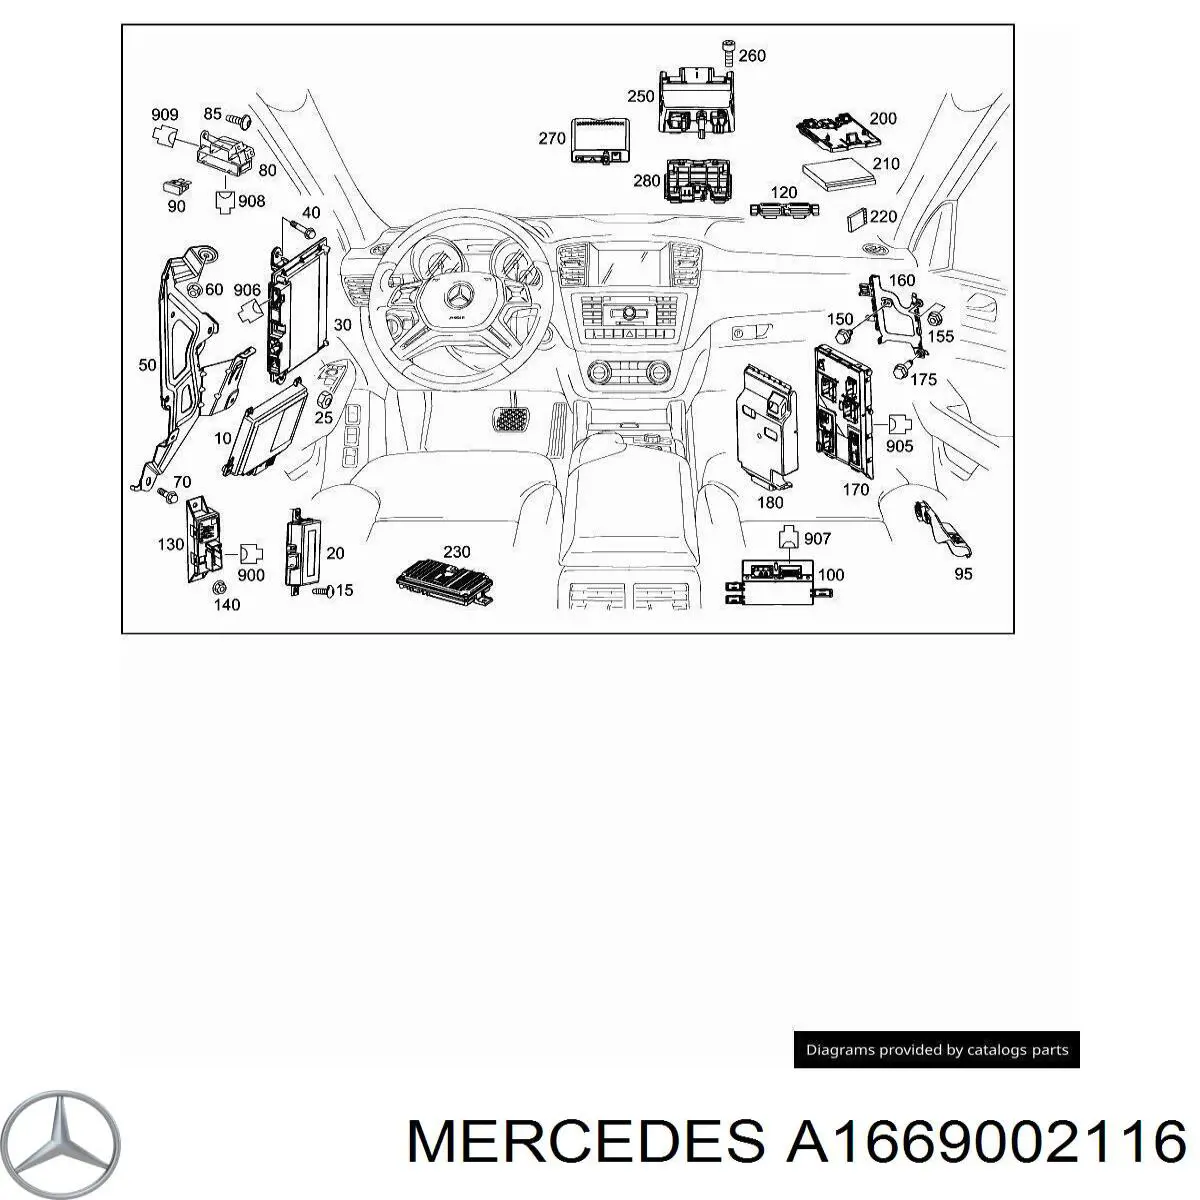 A1669002116 Mercedes